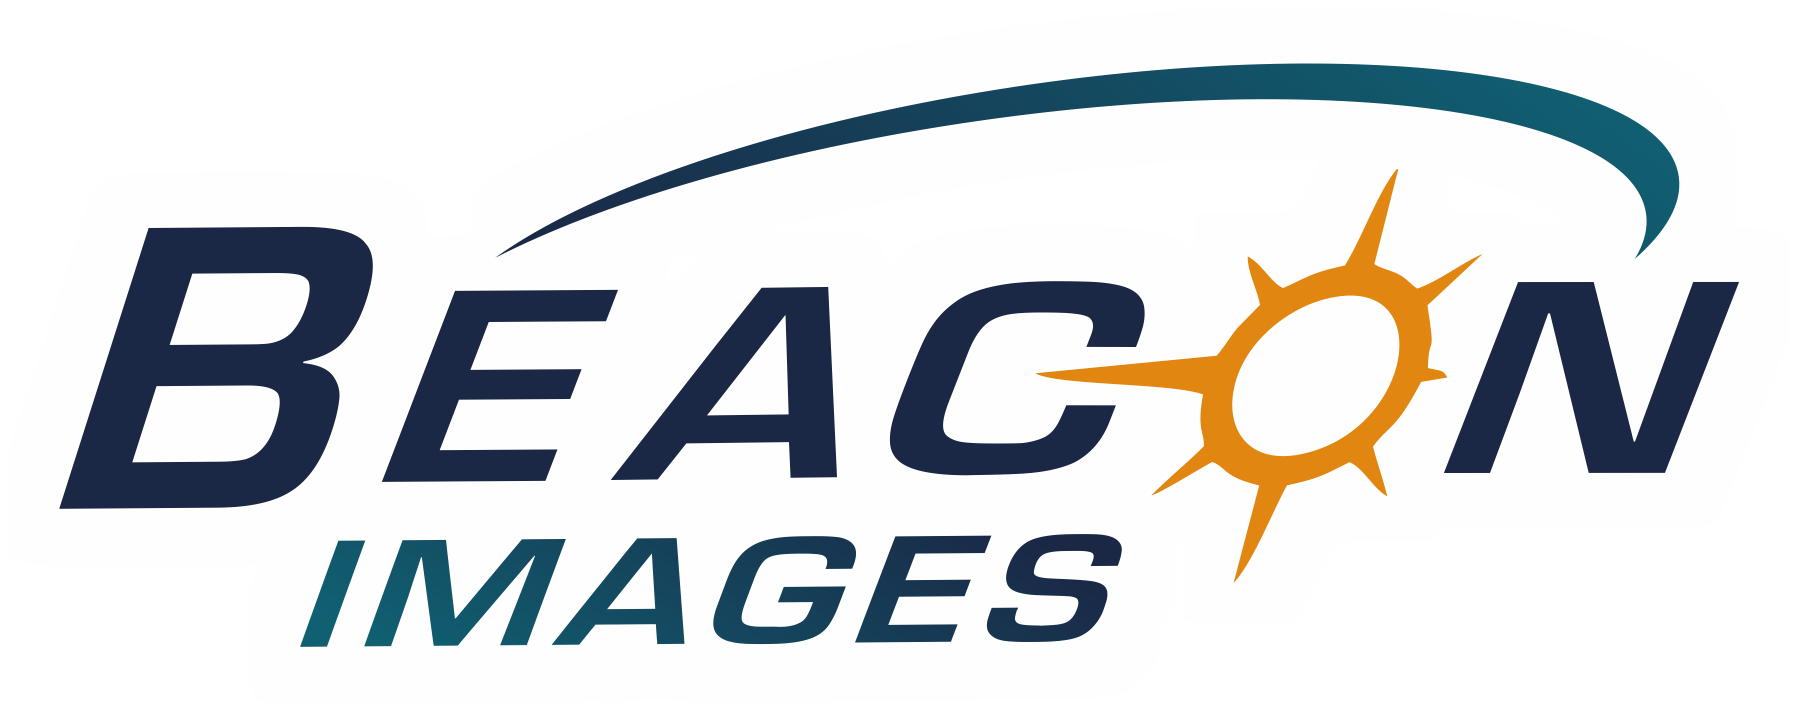 Beacon Images's Logo